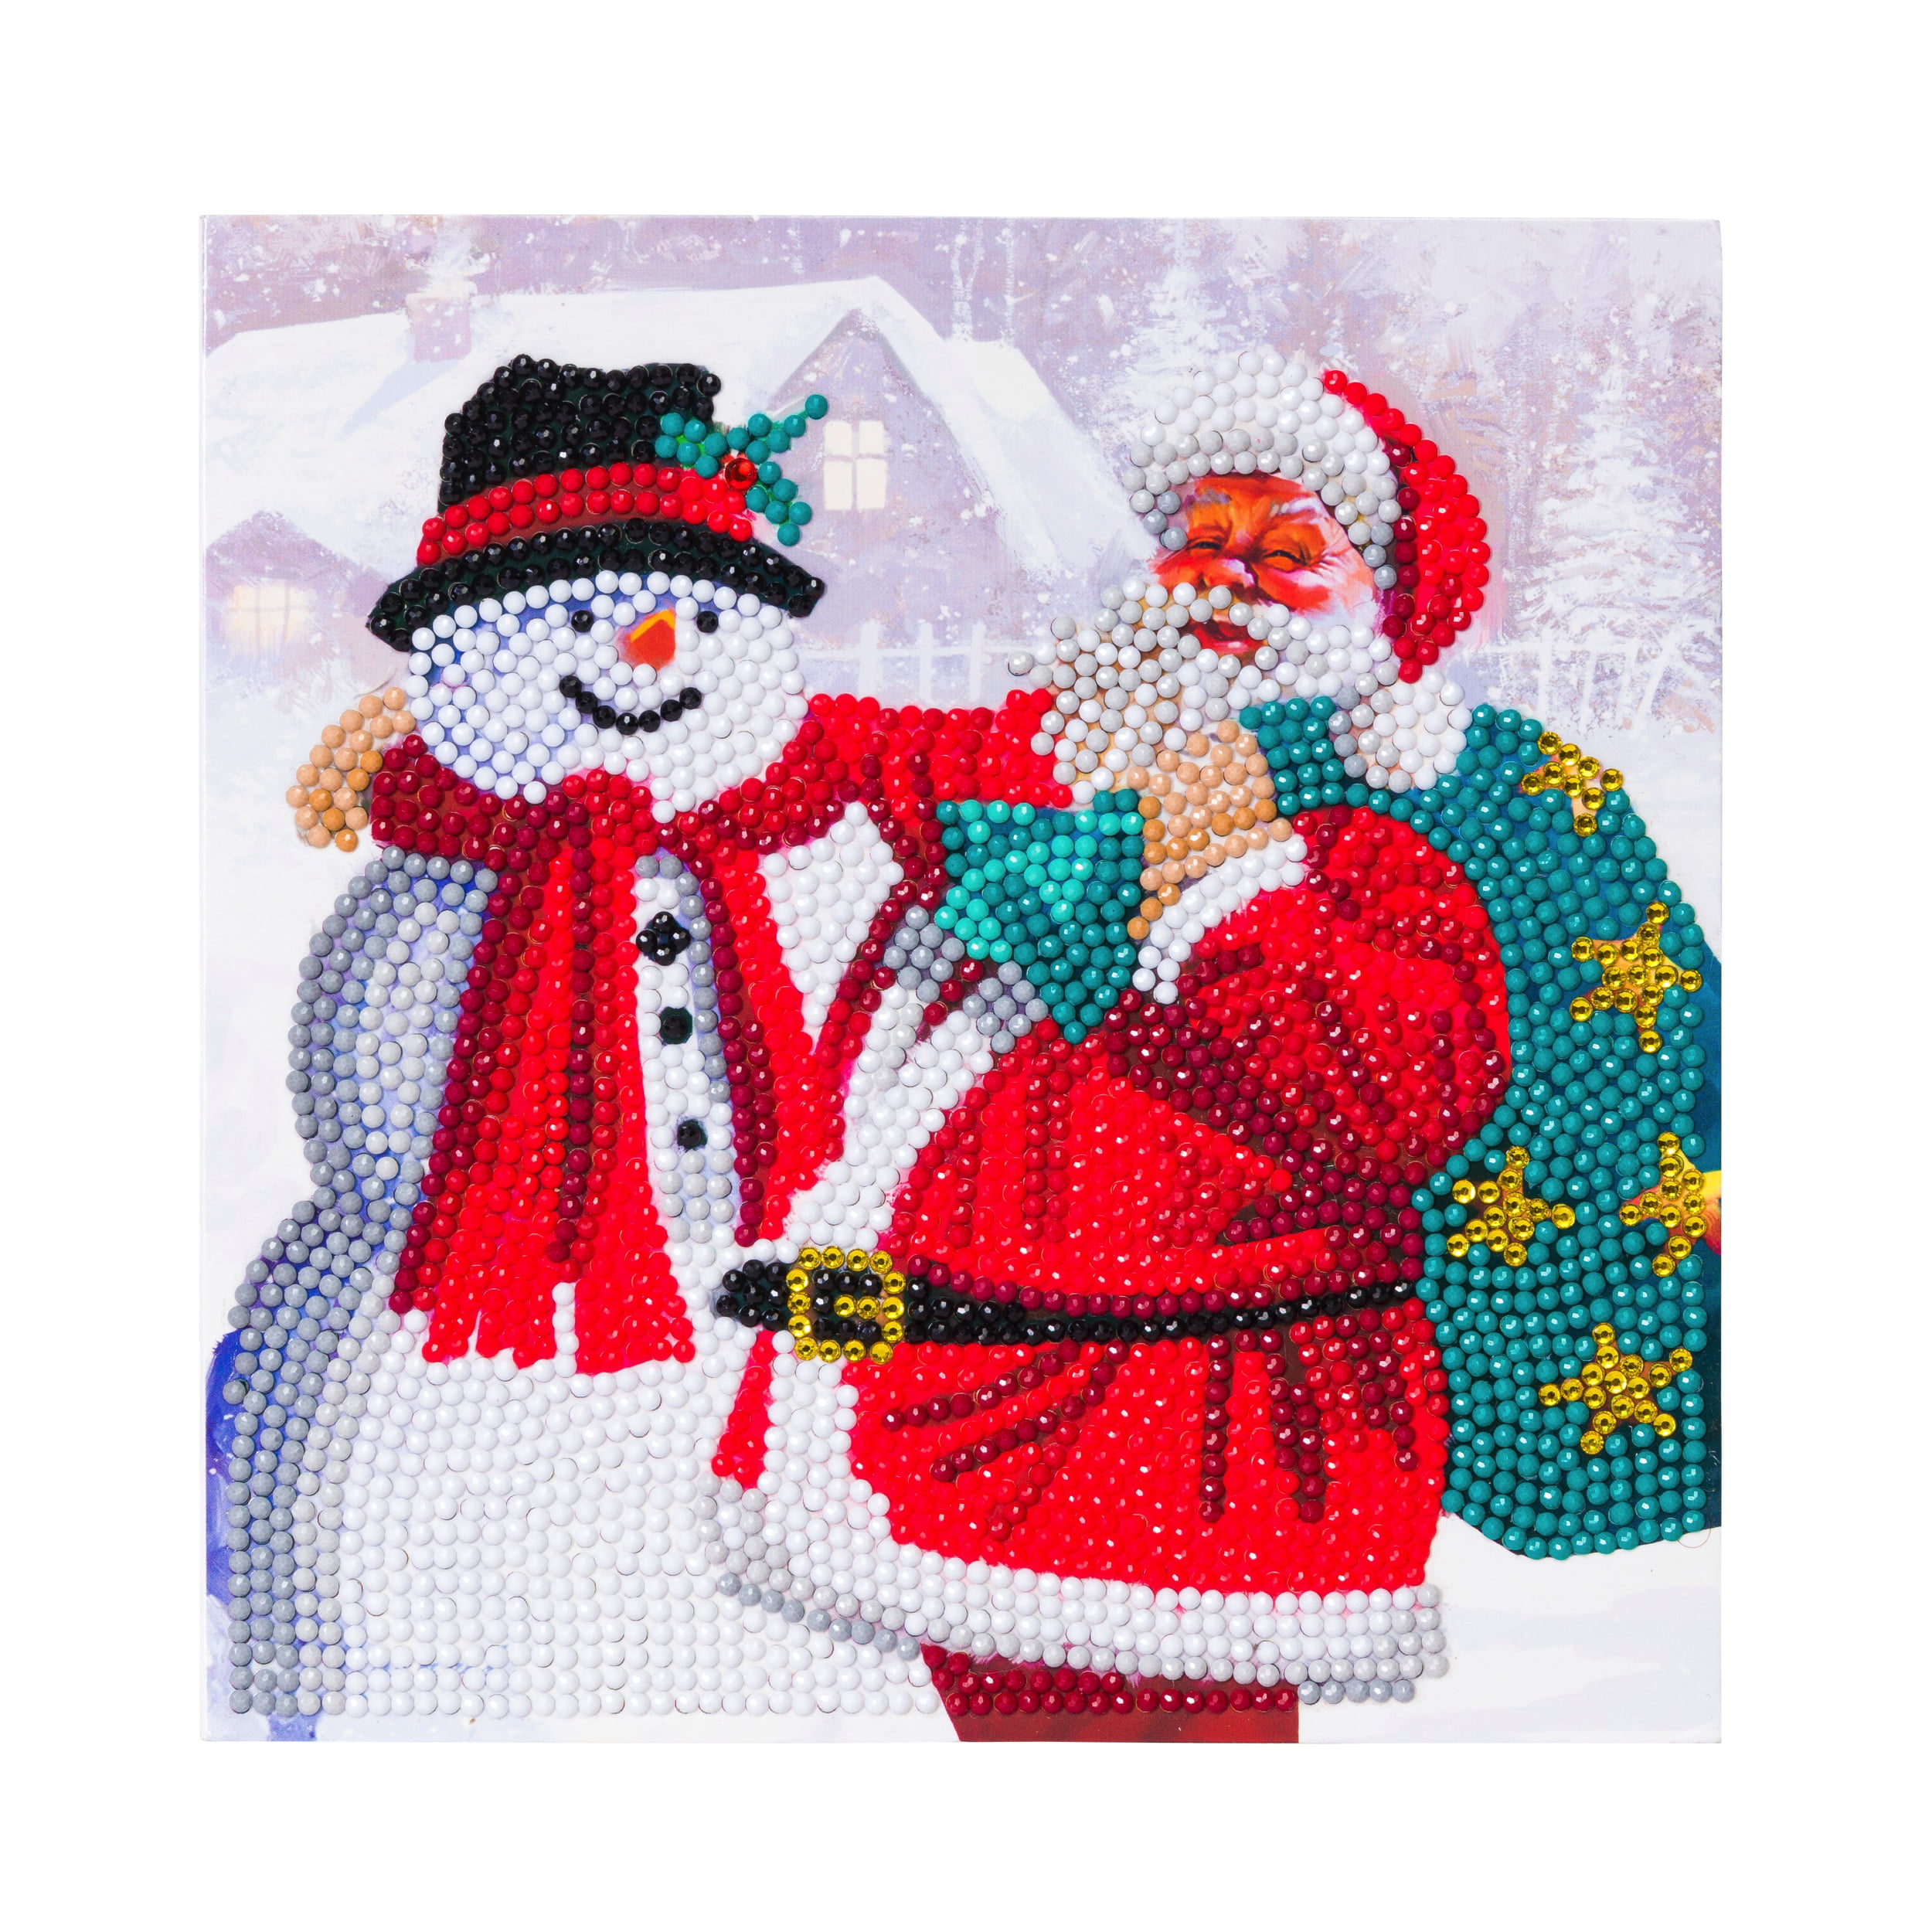 Snowman Diamond Art Card Kit by Make Market® Christmas-Christmas Crafts 